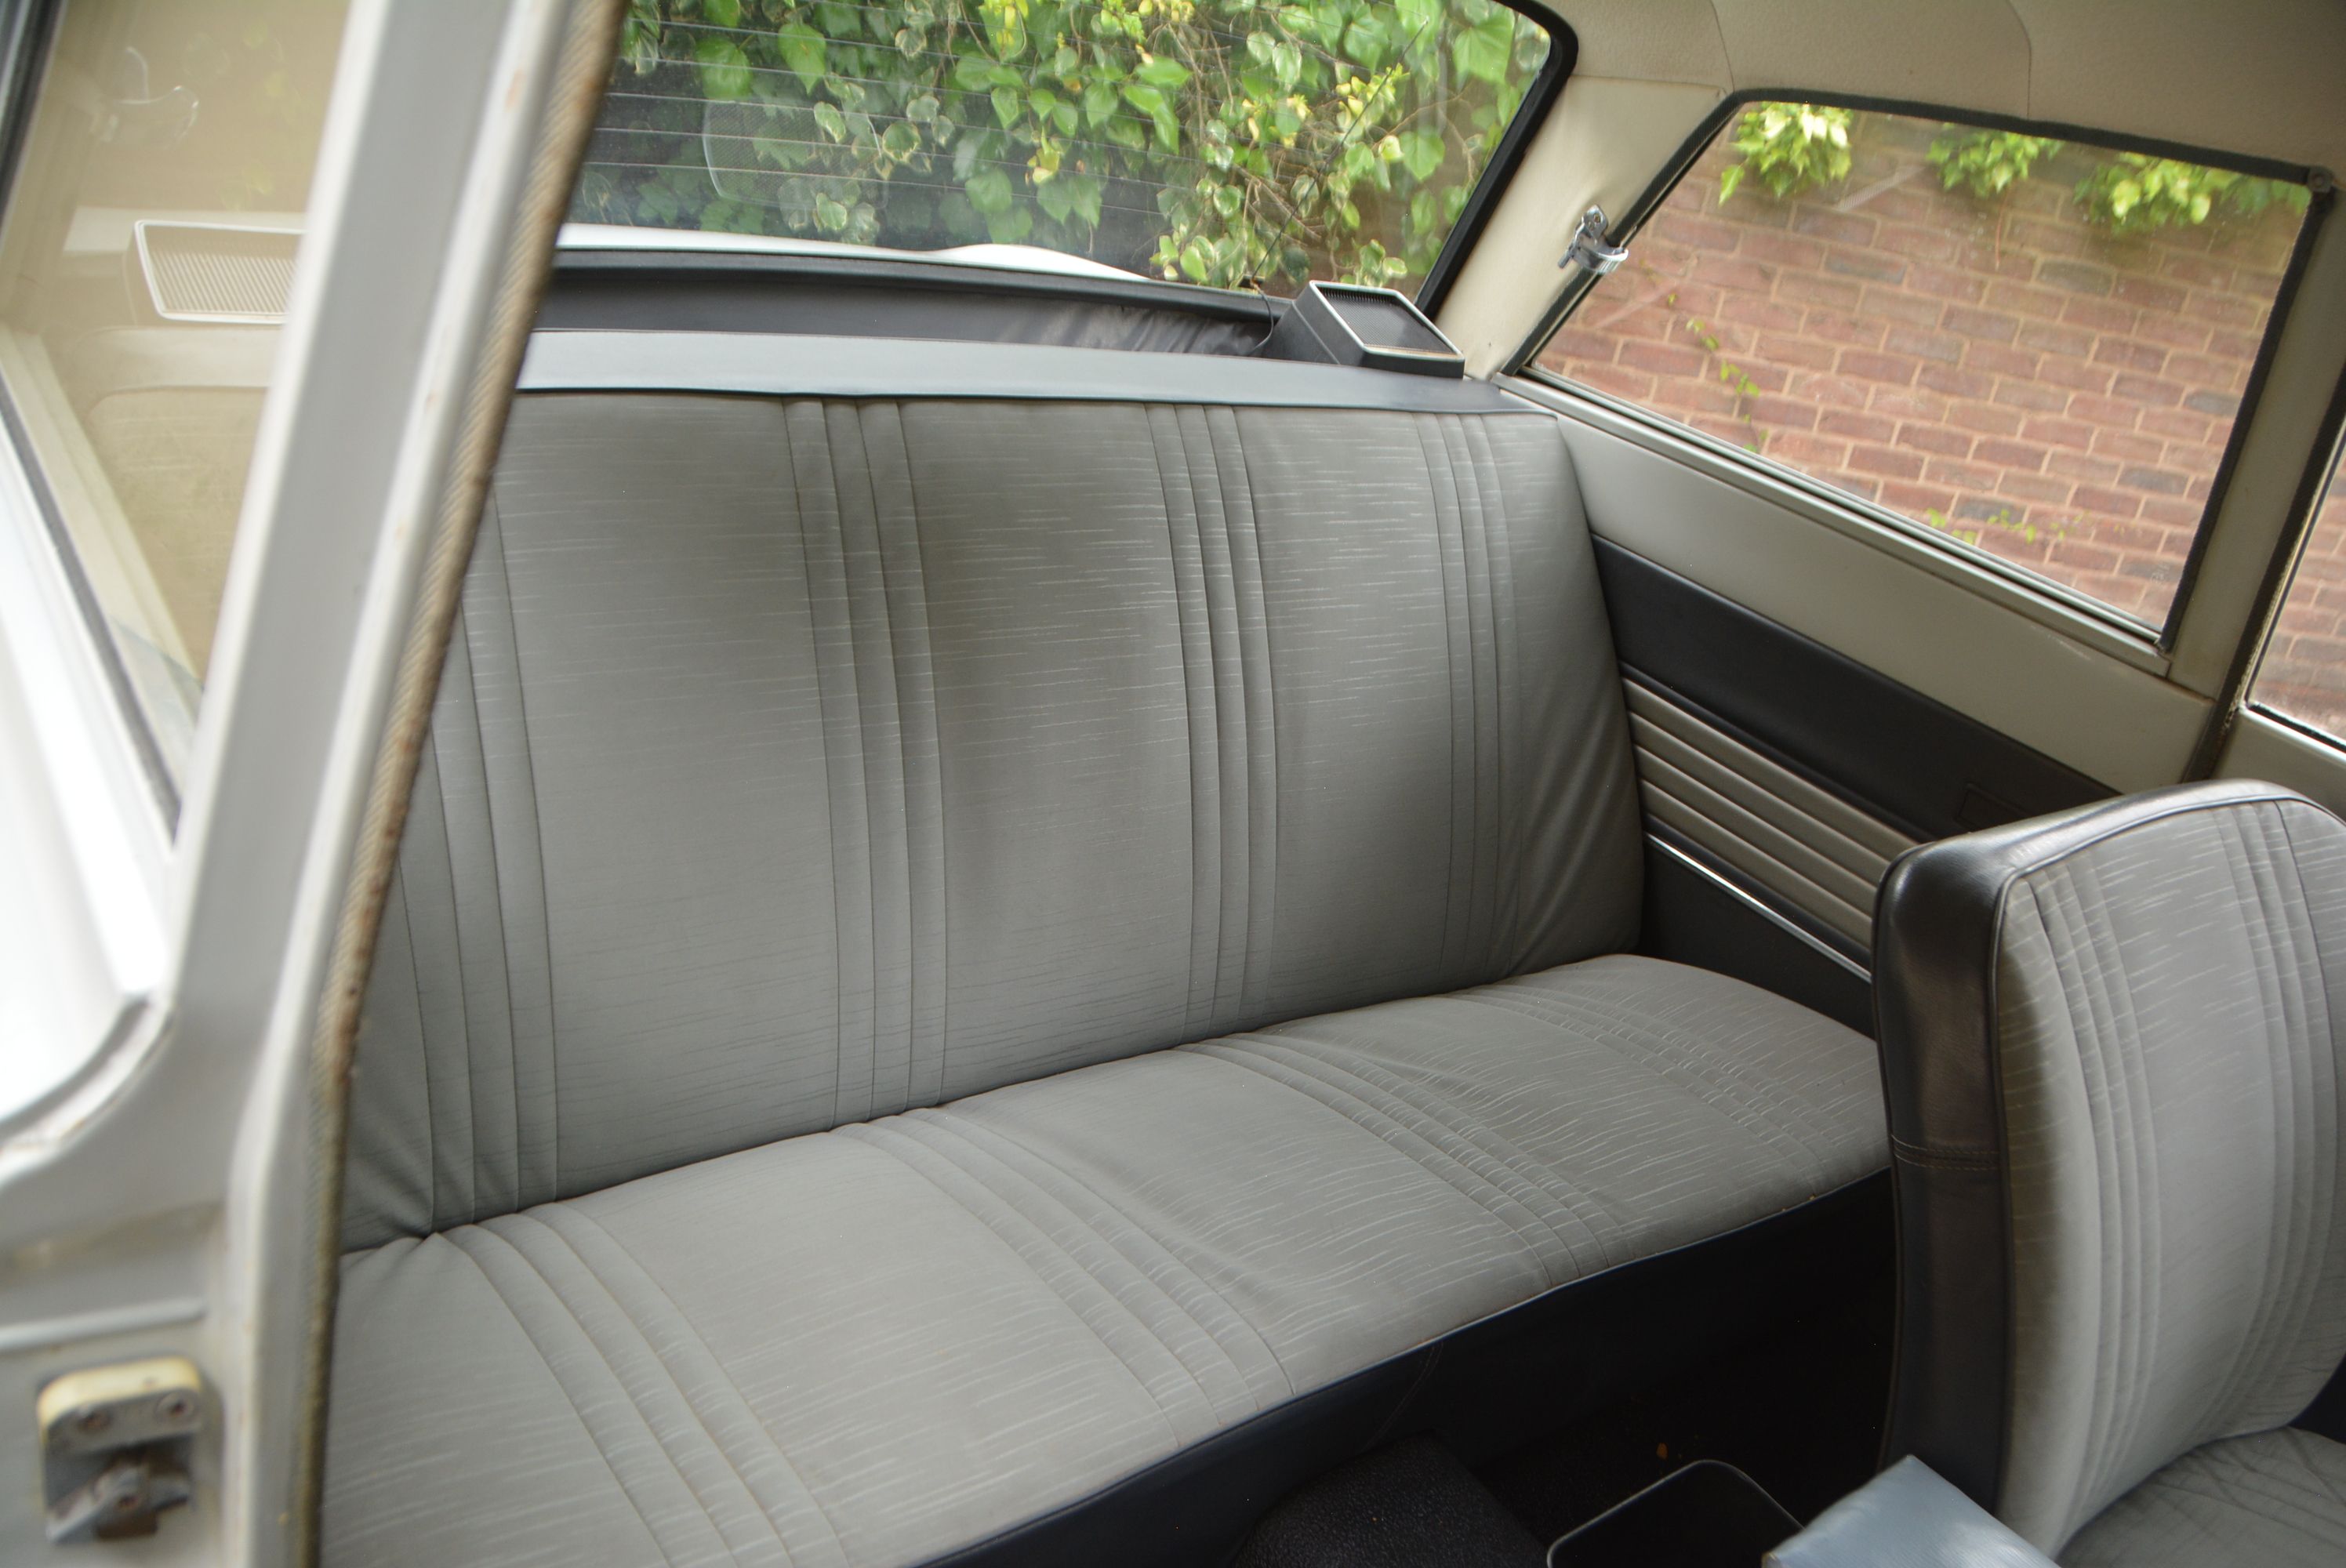 Ford Cortina MkI Deluxe